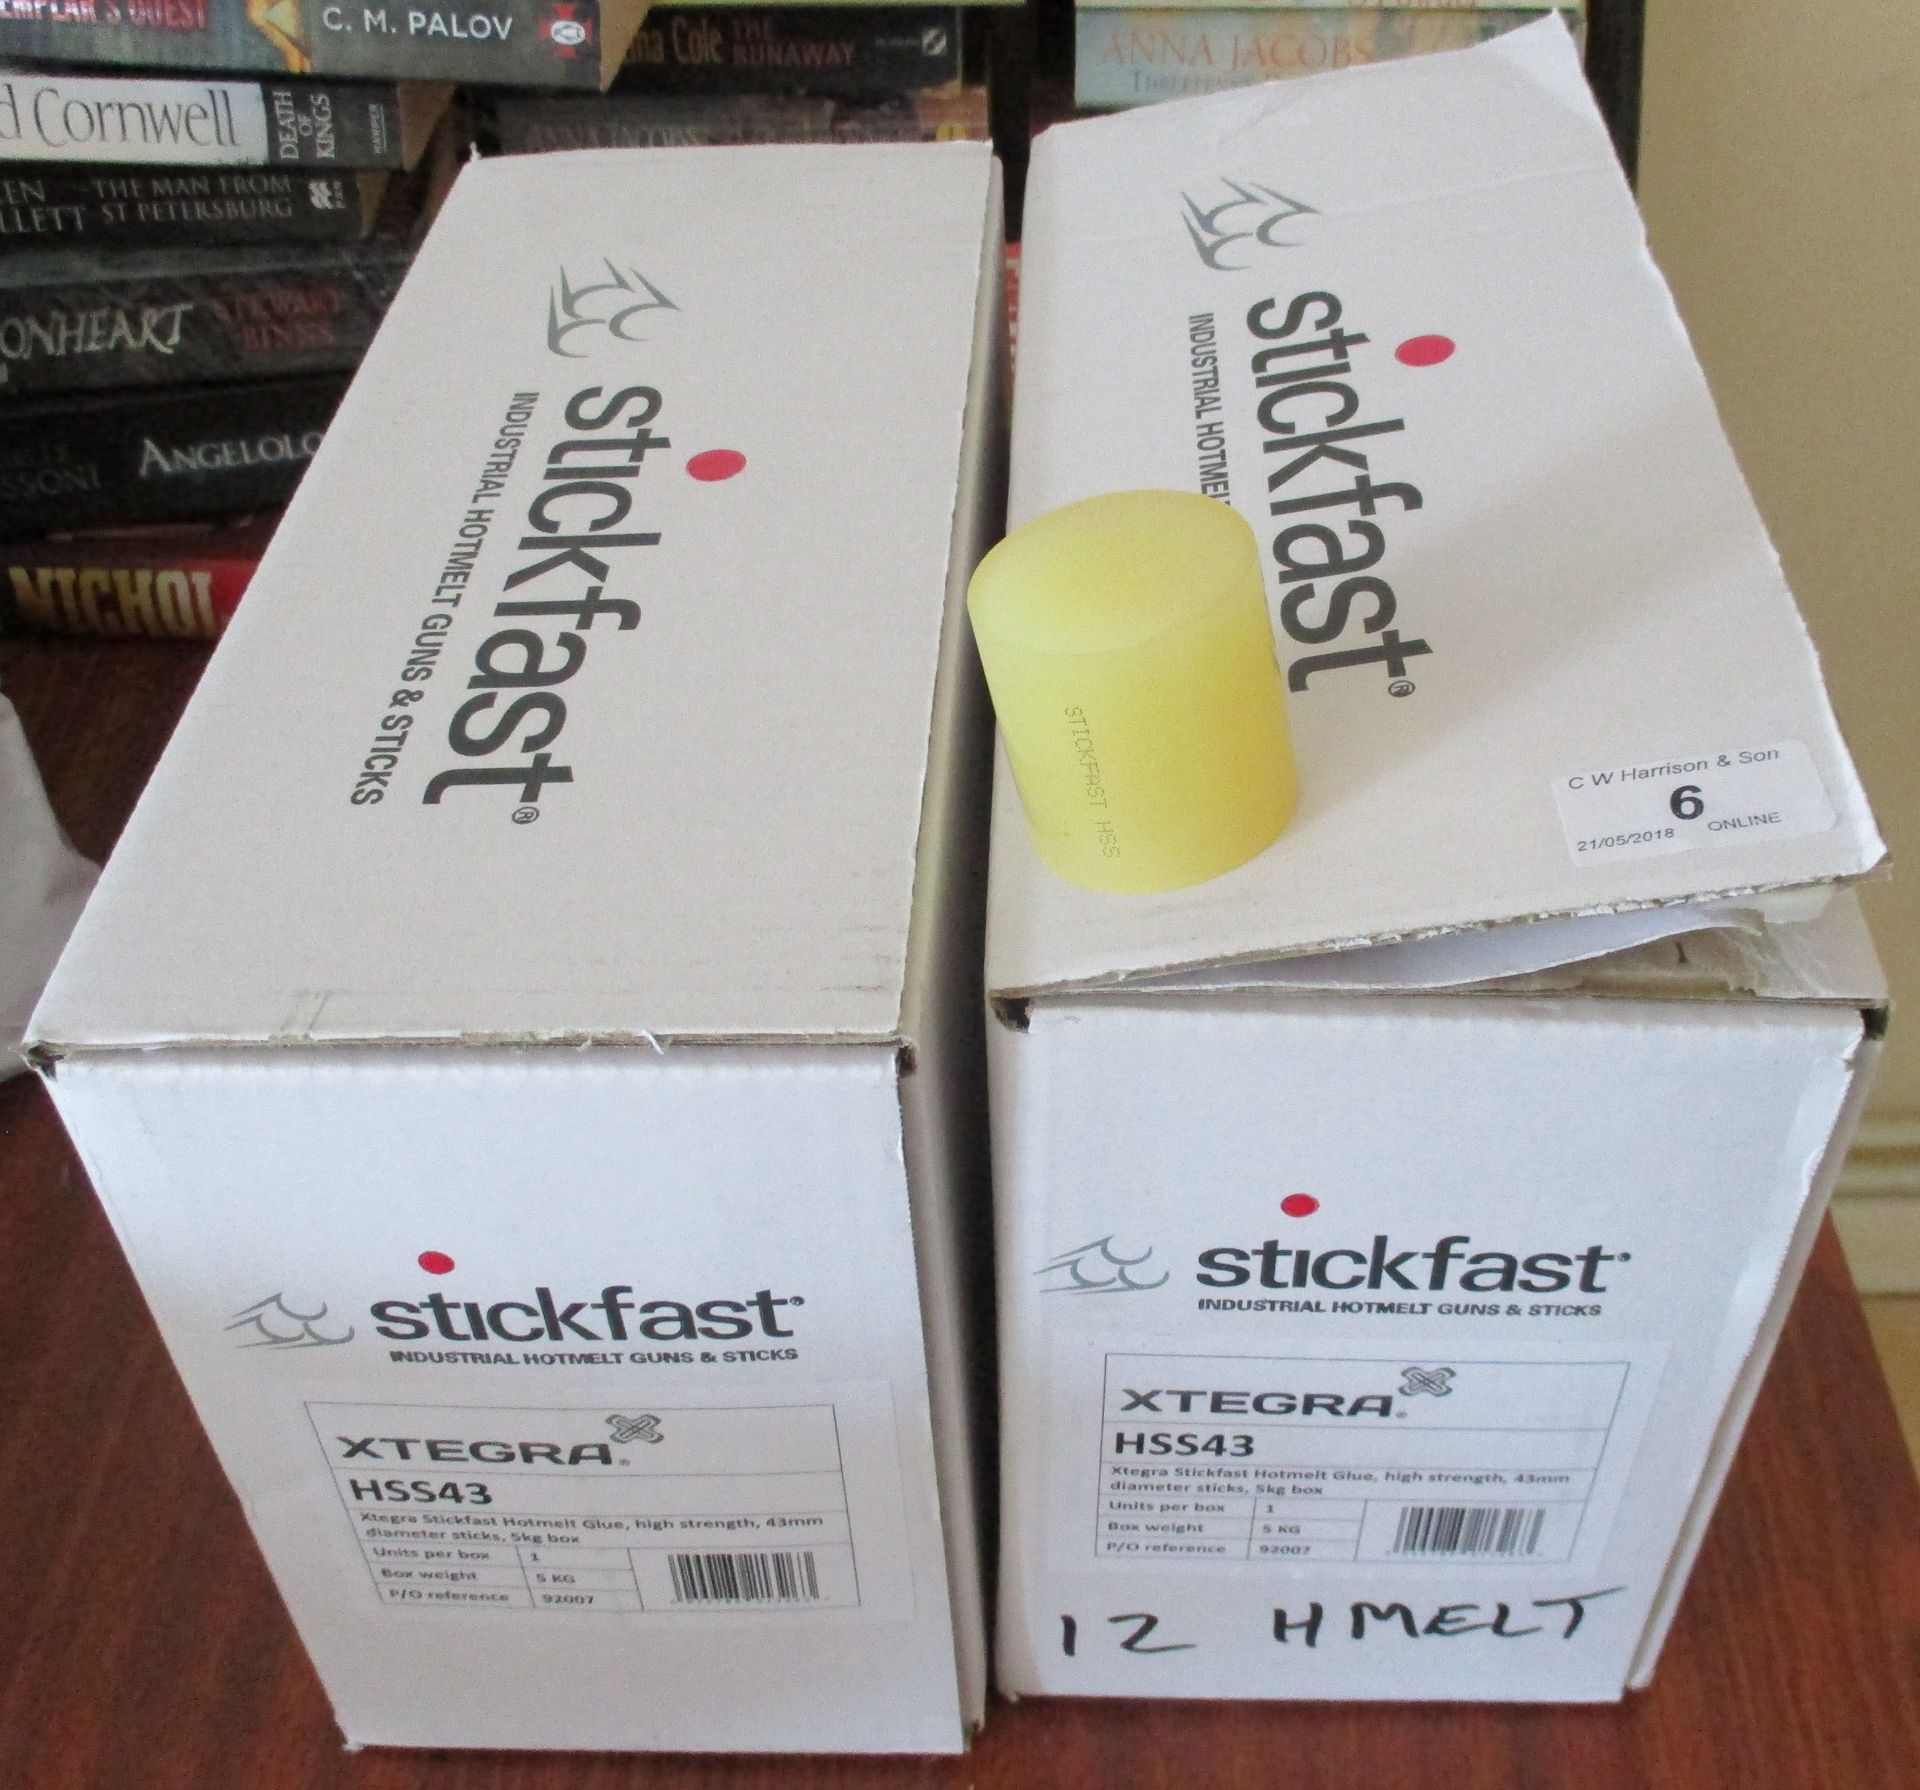 2 x boxes of Stickfast glue sticks - 5kg